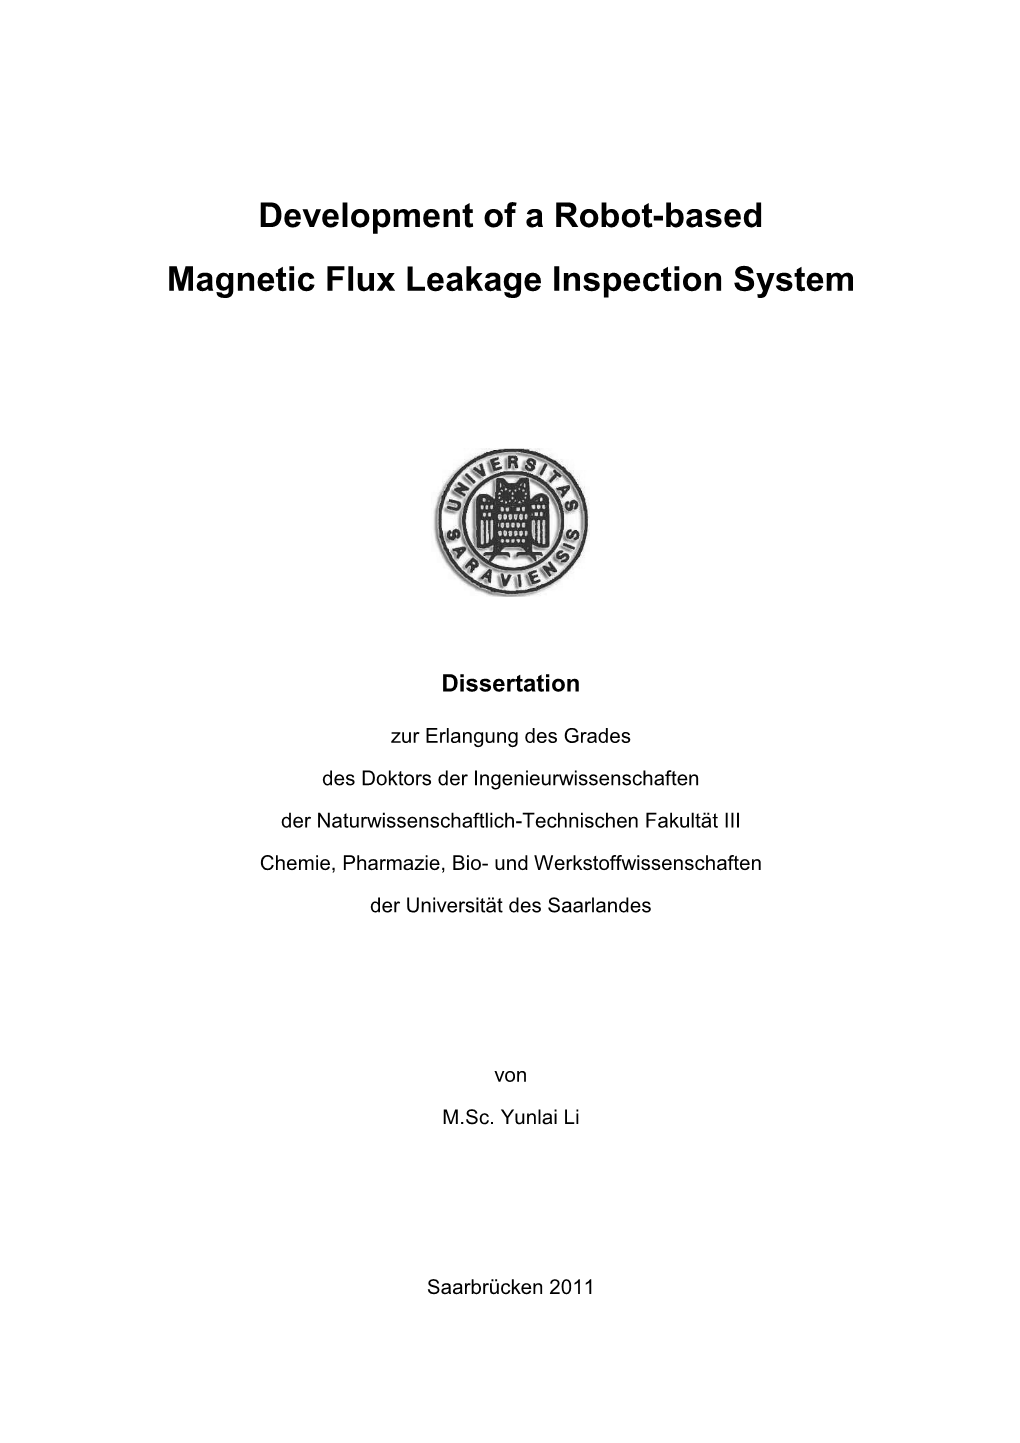 Development of a Robot-Based Magnetic Flux Leakage Inspection